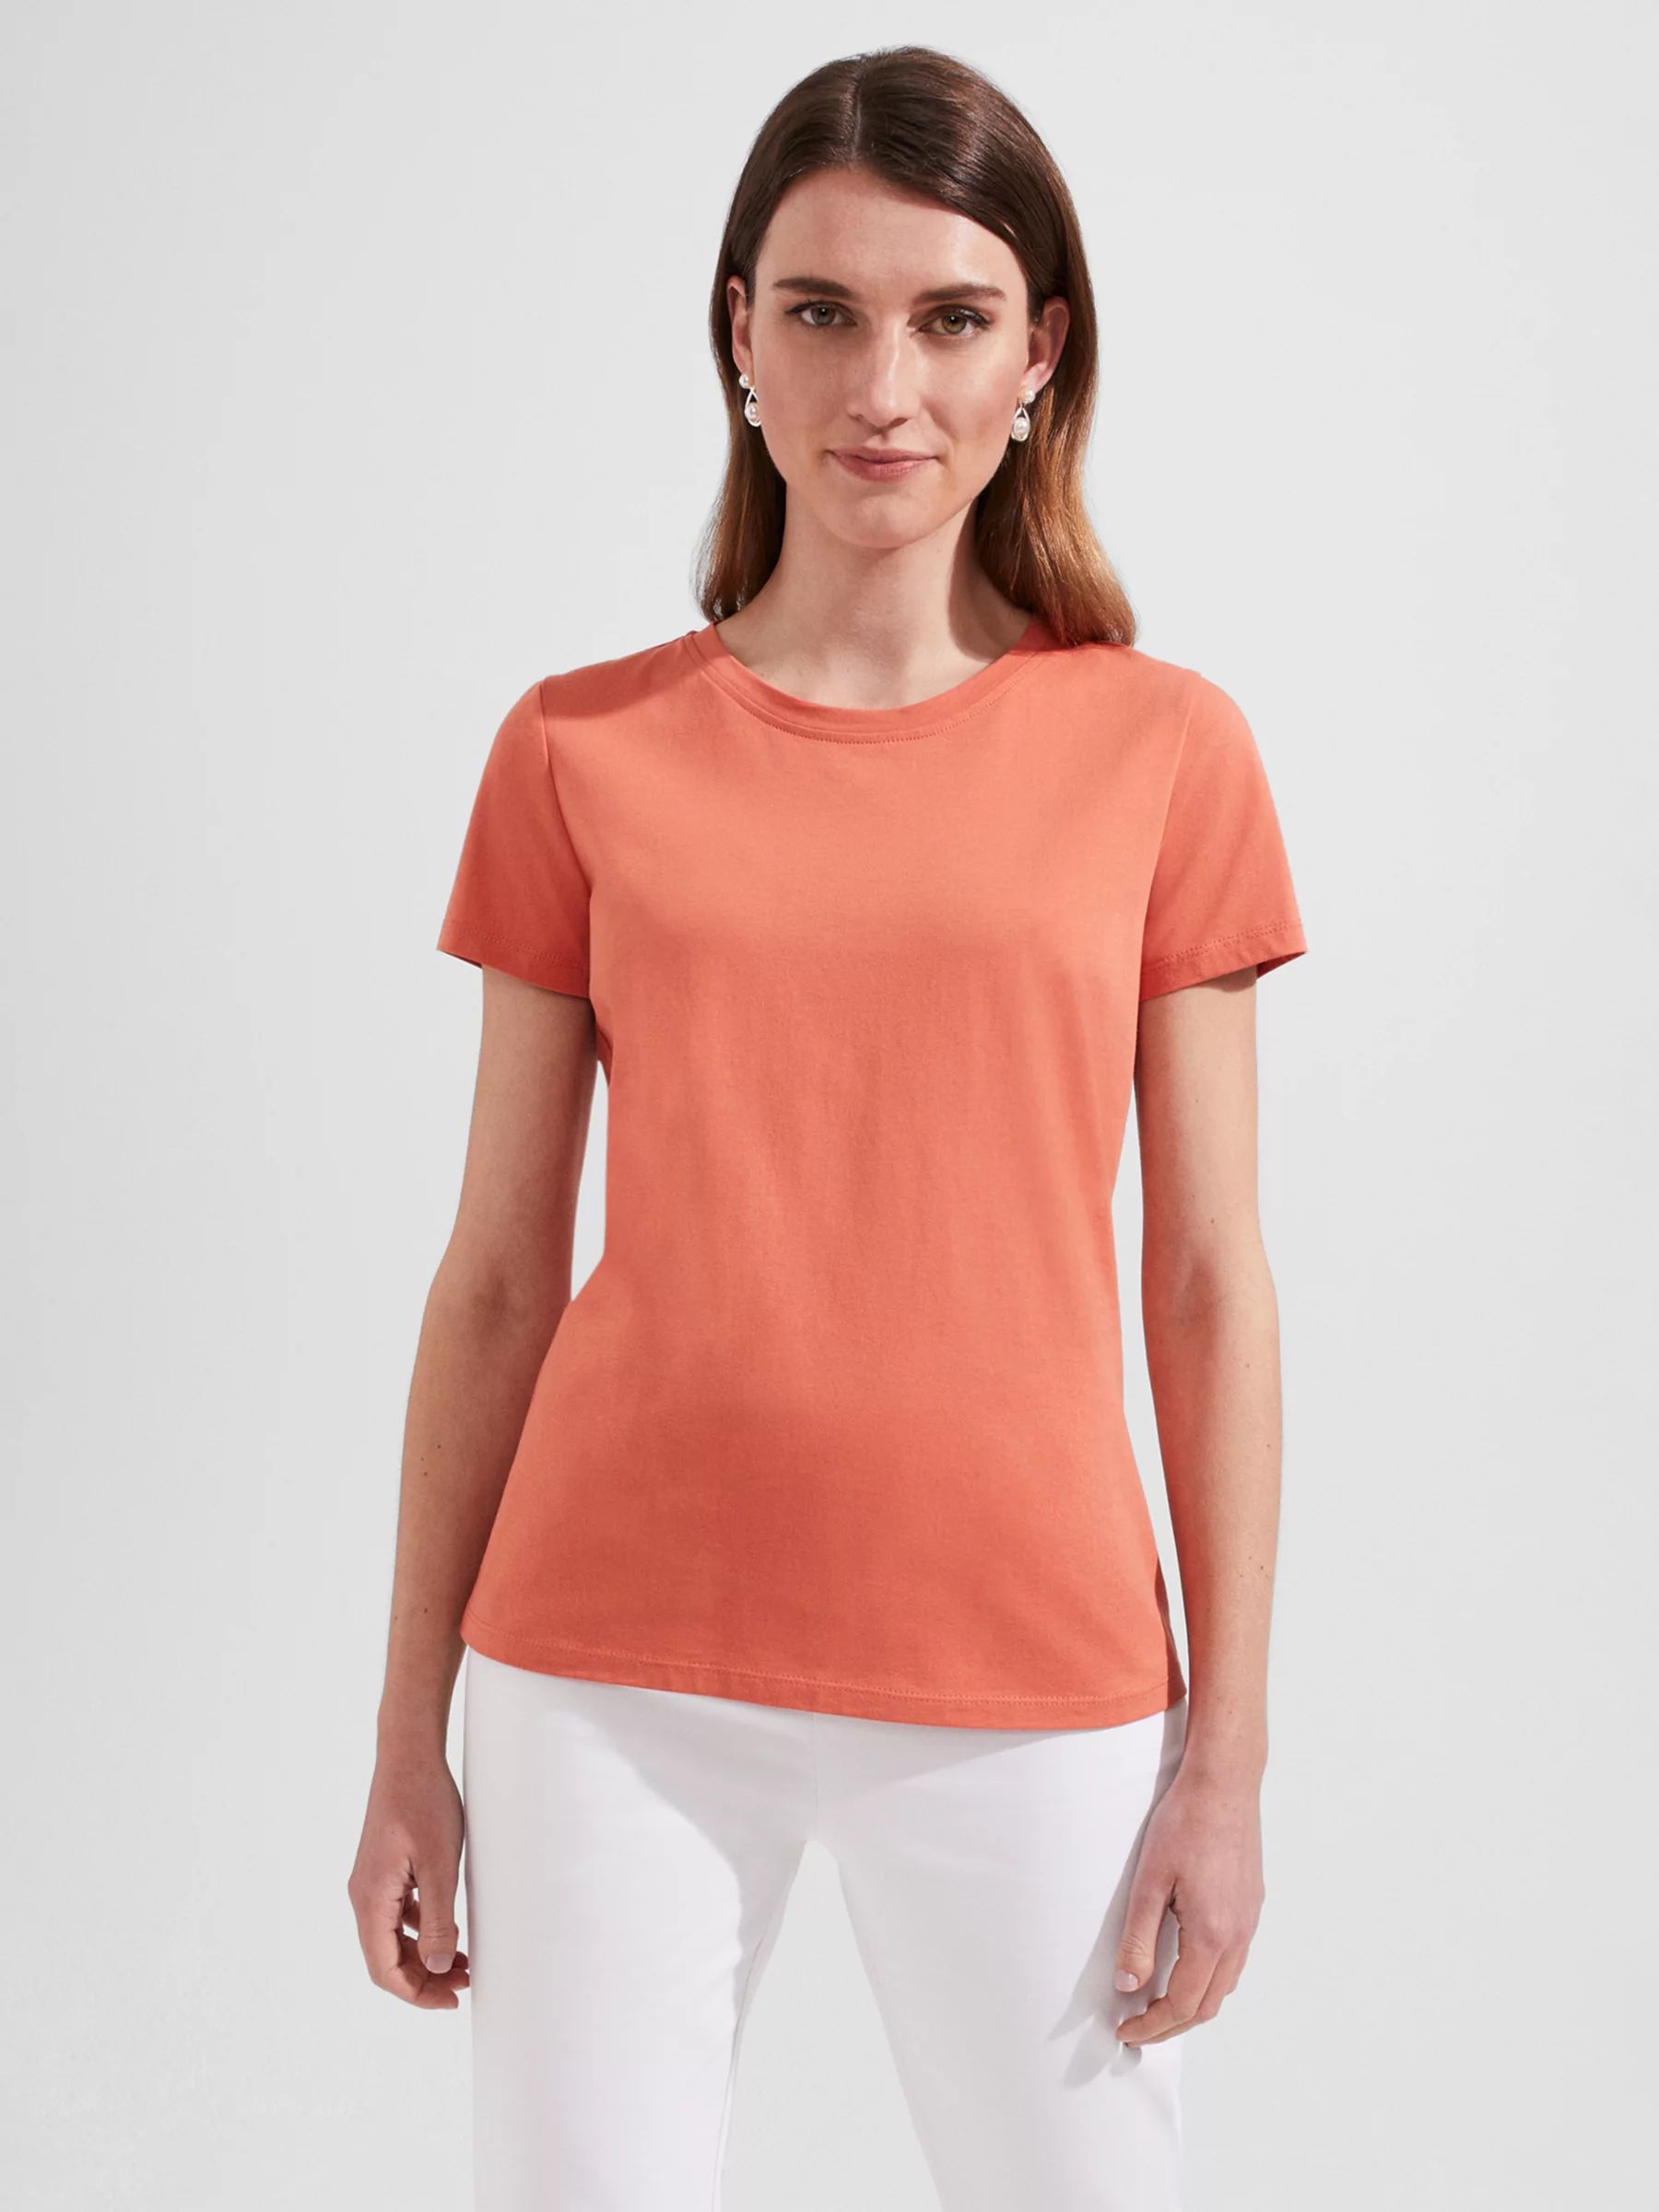 Hobbs Pixie Plain Cotton T-Shirt, Deep Apricot | John Lewis (UK)